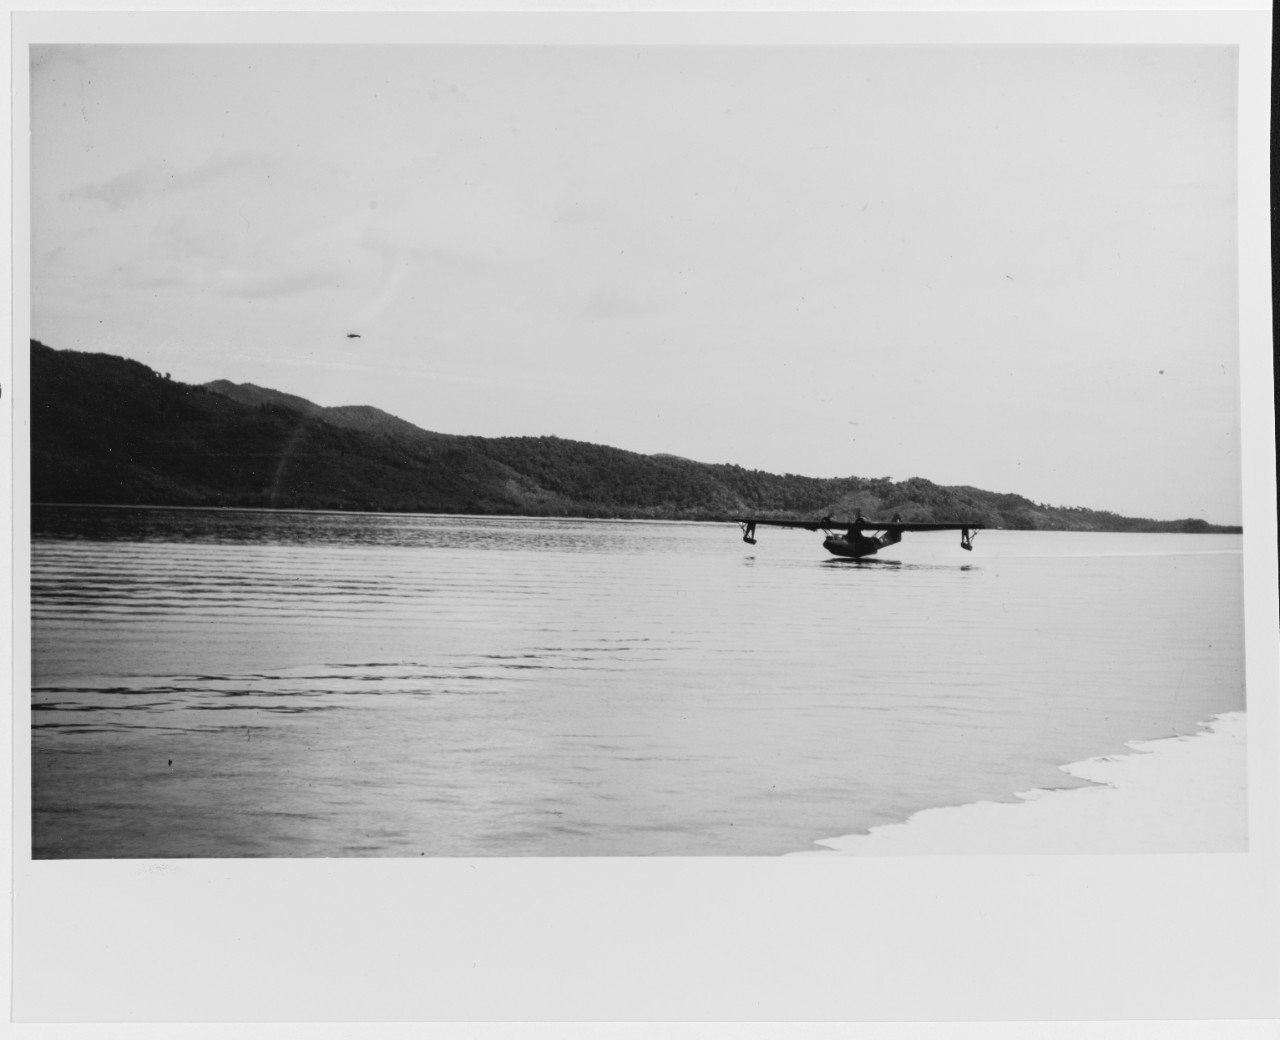 PBY patrol bomber, of a "Black Cat" squadron